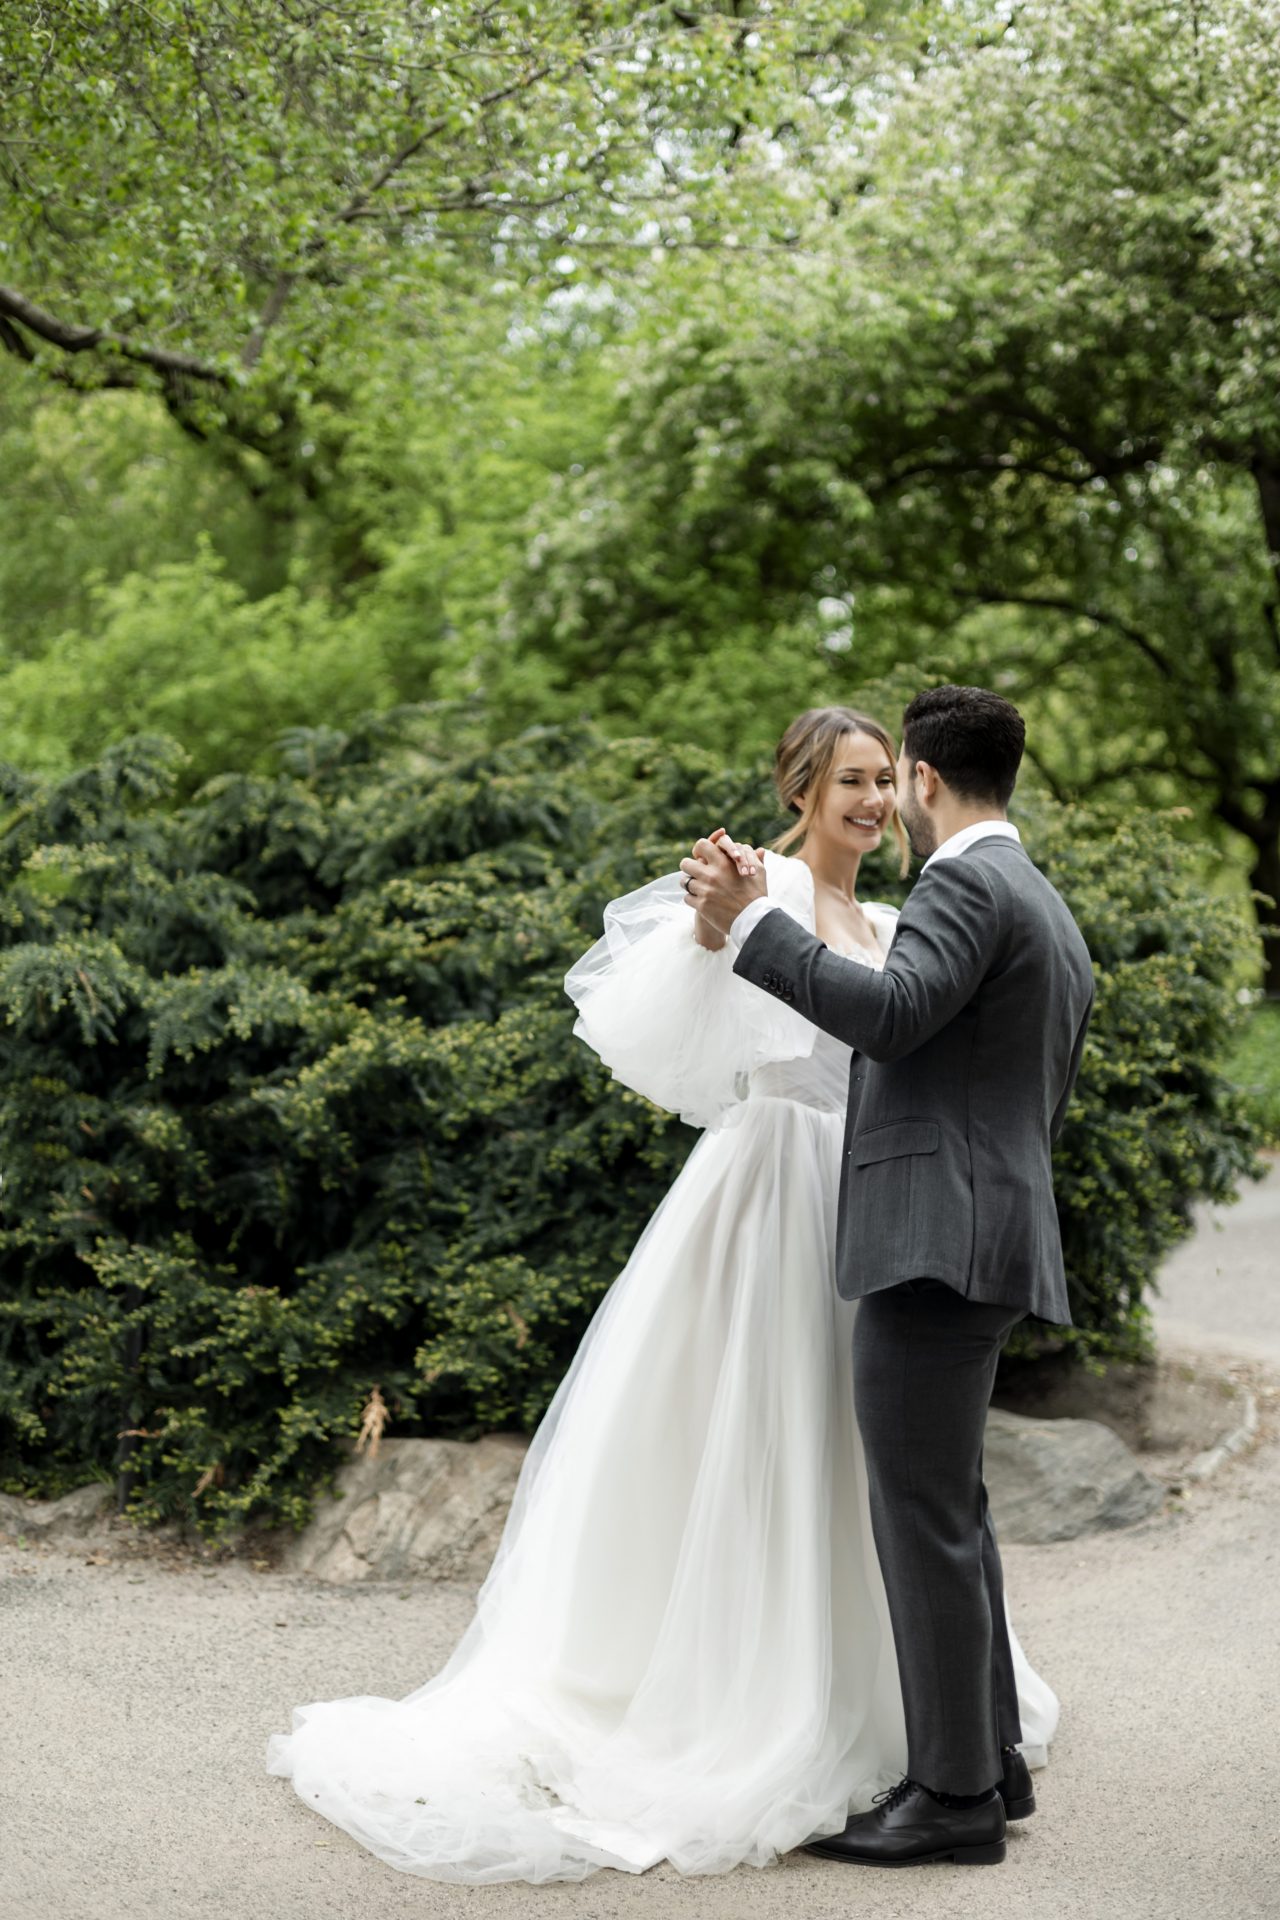 simple wedding central park nyc 19